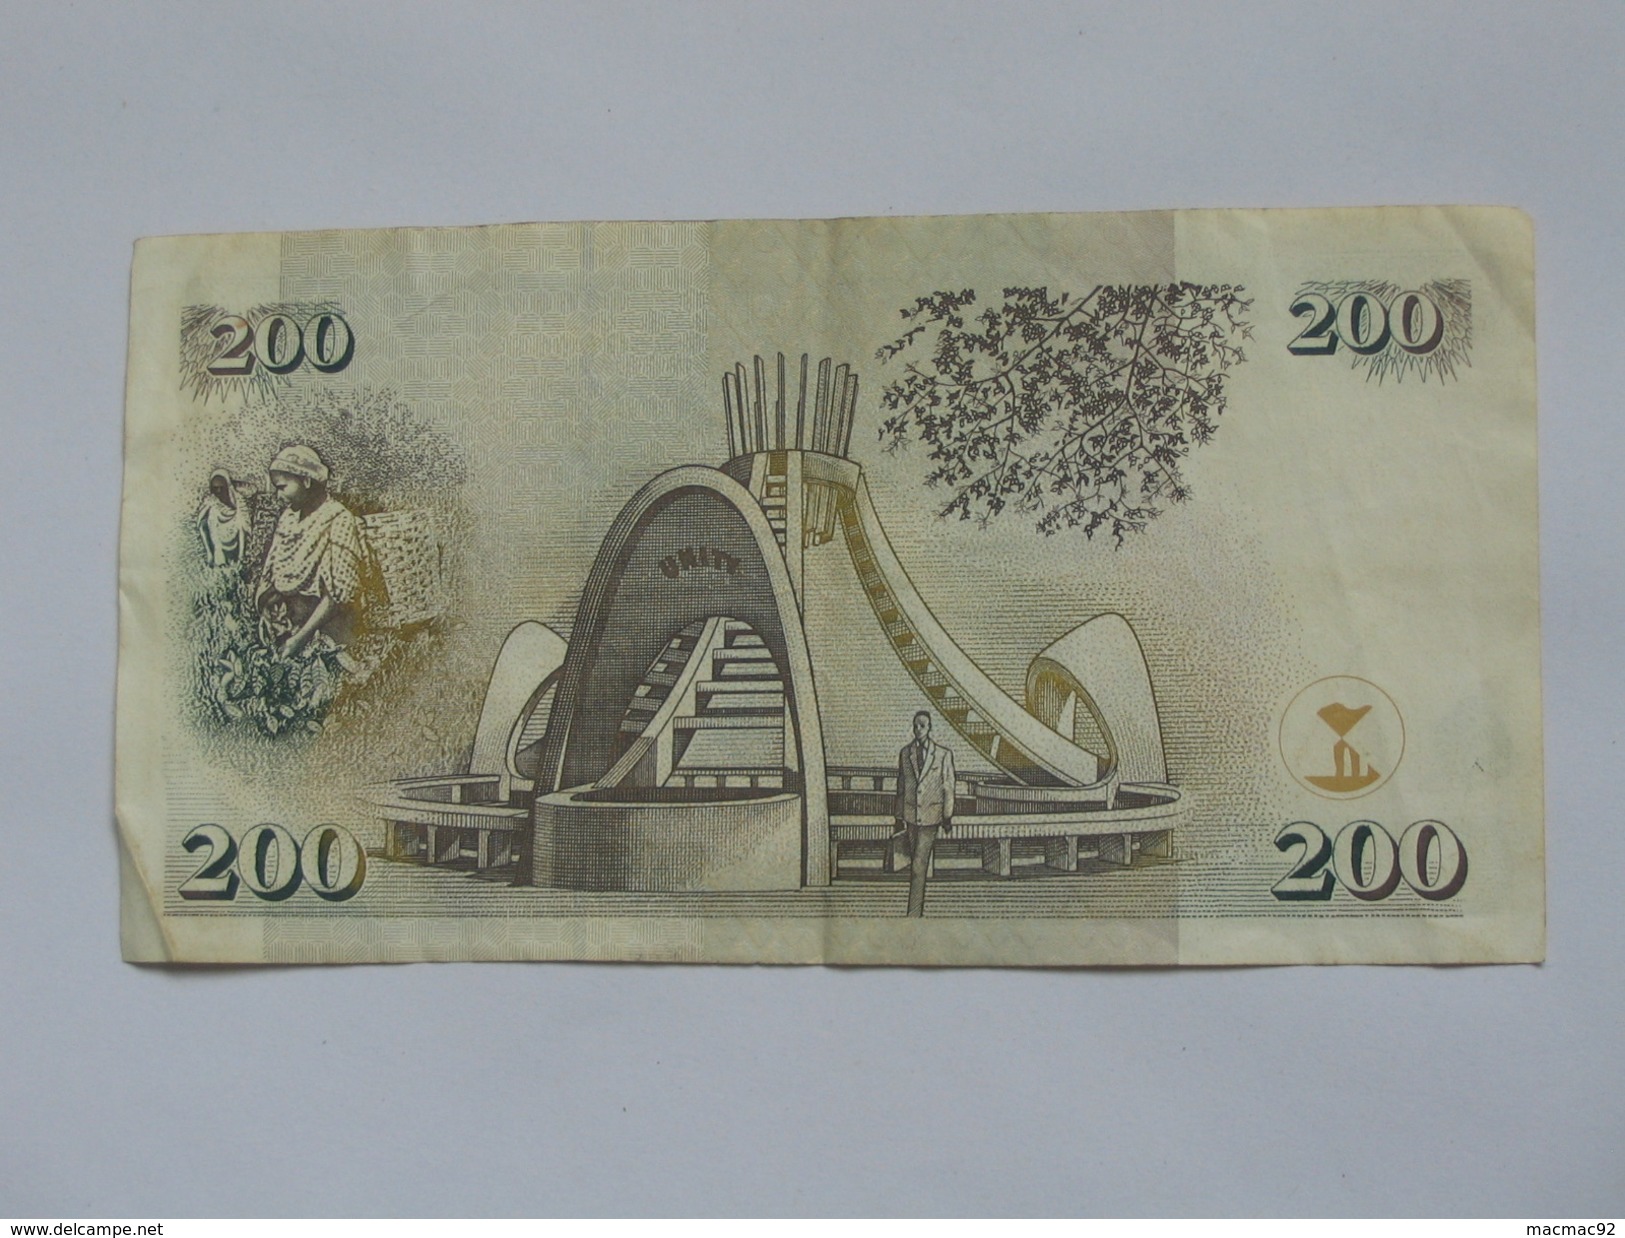 200 Shilingi Mia Mbili - Central Bank Of KENYA -  **** EN ACHAT IMMEDIAT **** - Kenya